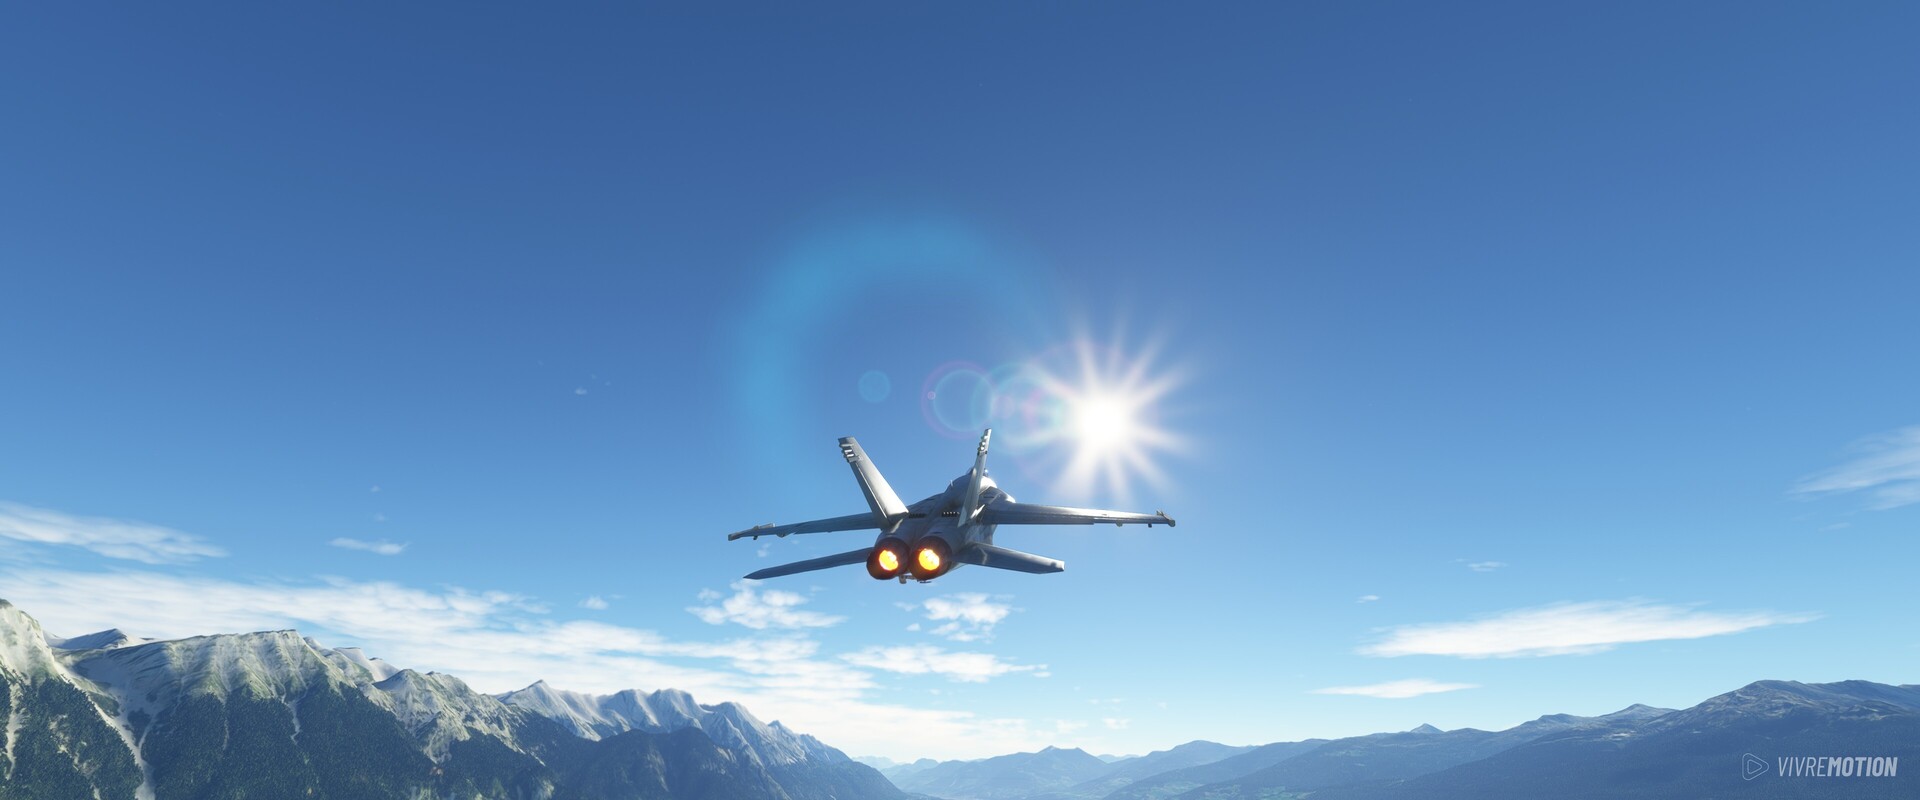 Germany Mountians - Boeing F/A-18 Super Hornet - Microsoft Flight Simulator - VIVRE-MOTION